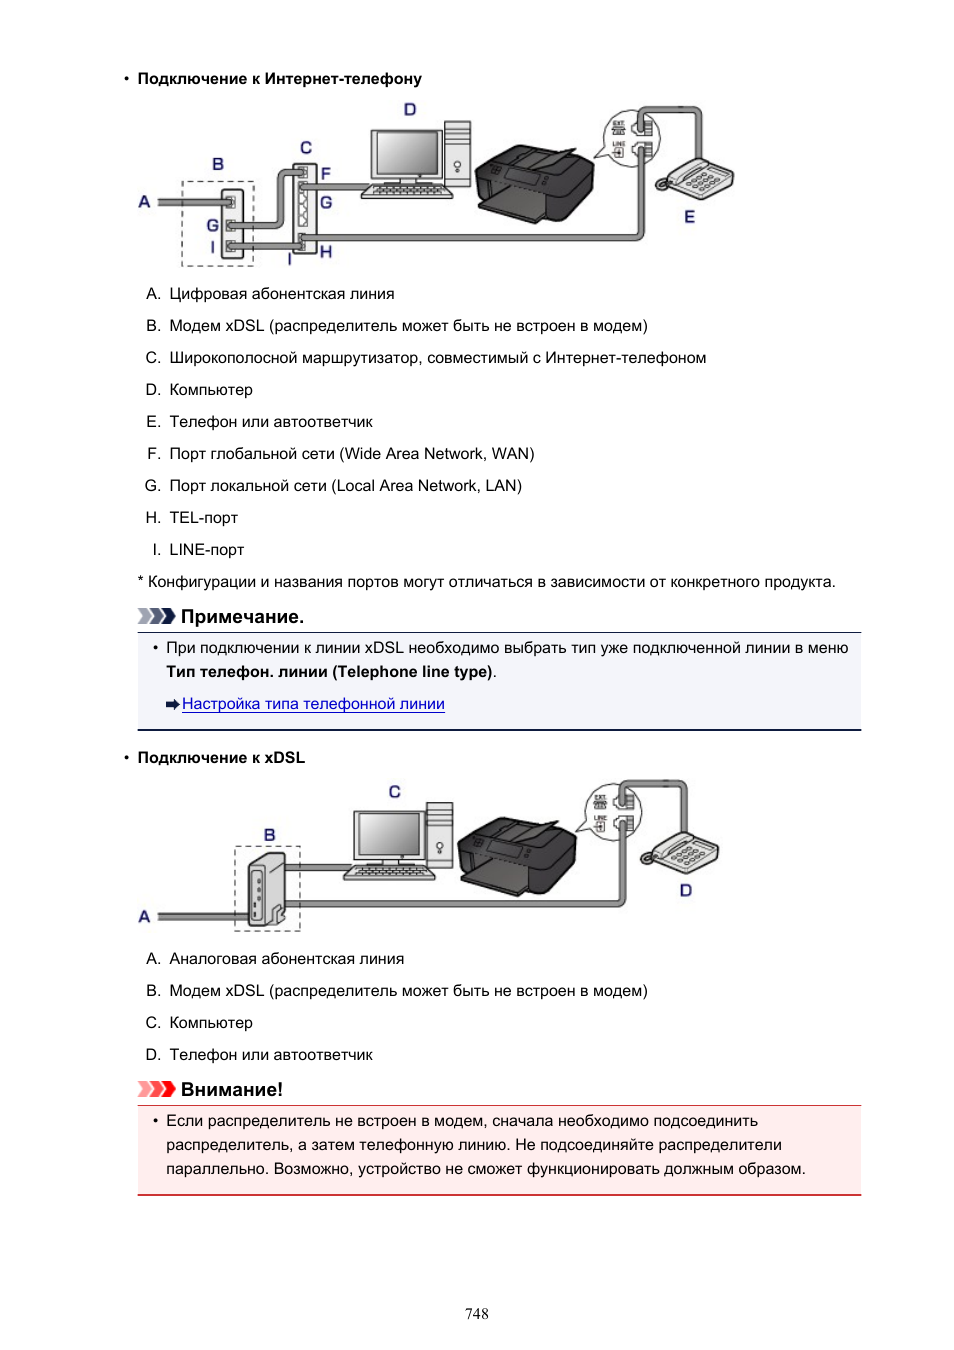 Инструкция по эксплуатации Canon PIXMA MX534 | Страница 748 / 1093